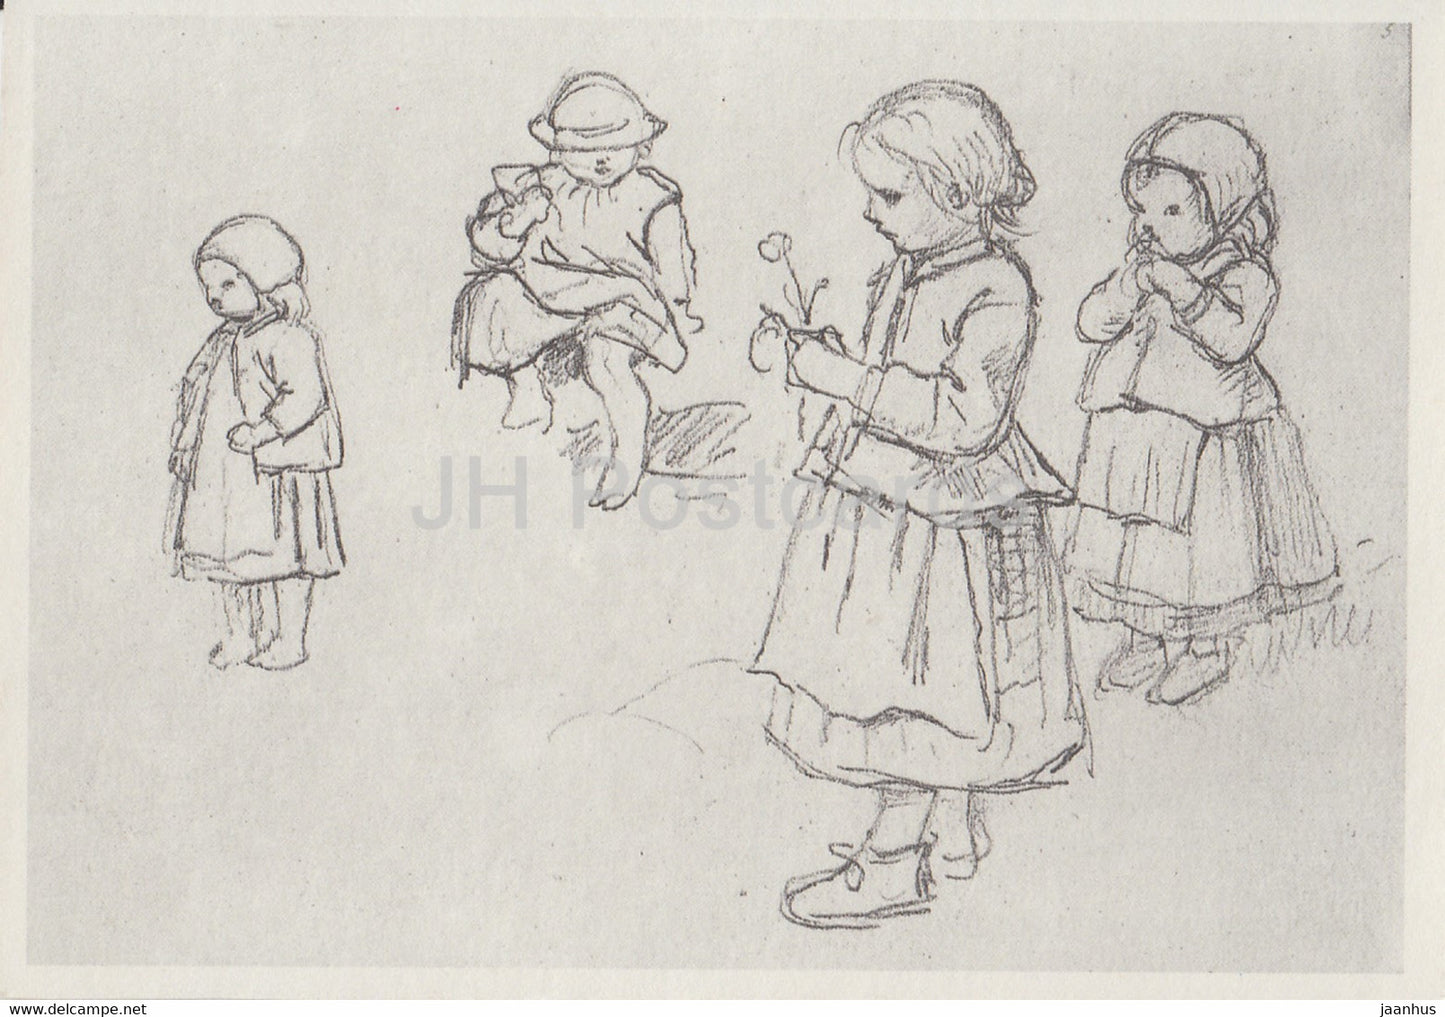 painting by Ludwig Richter - Kinder - Children - German art - Germany - unused - JH Postcards